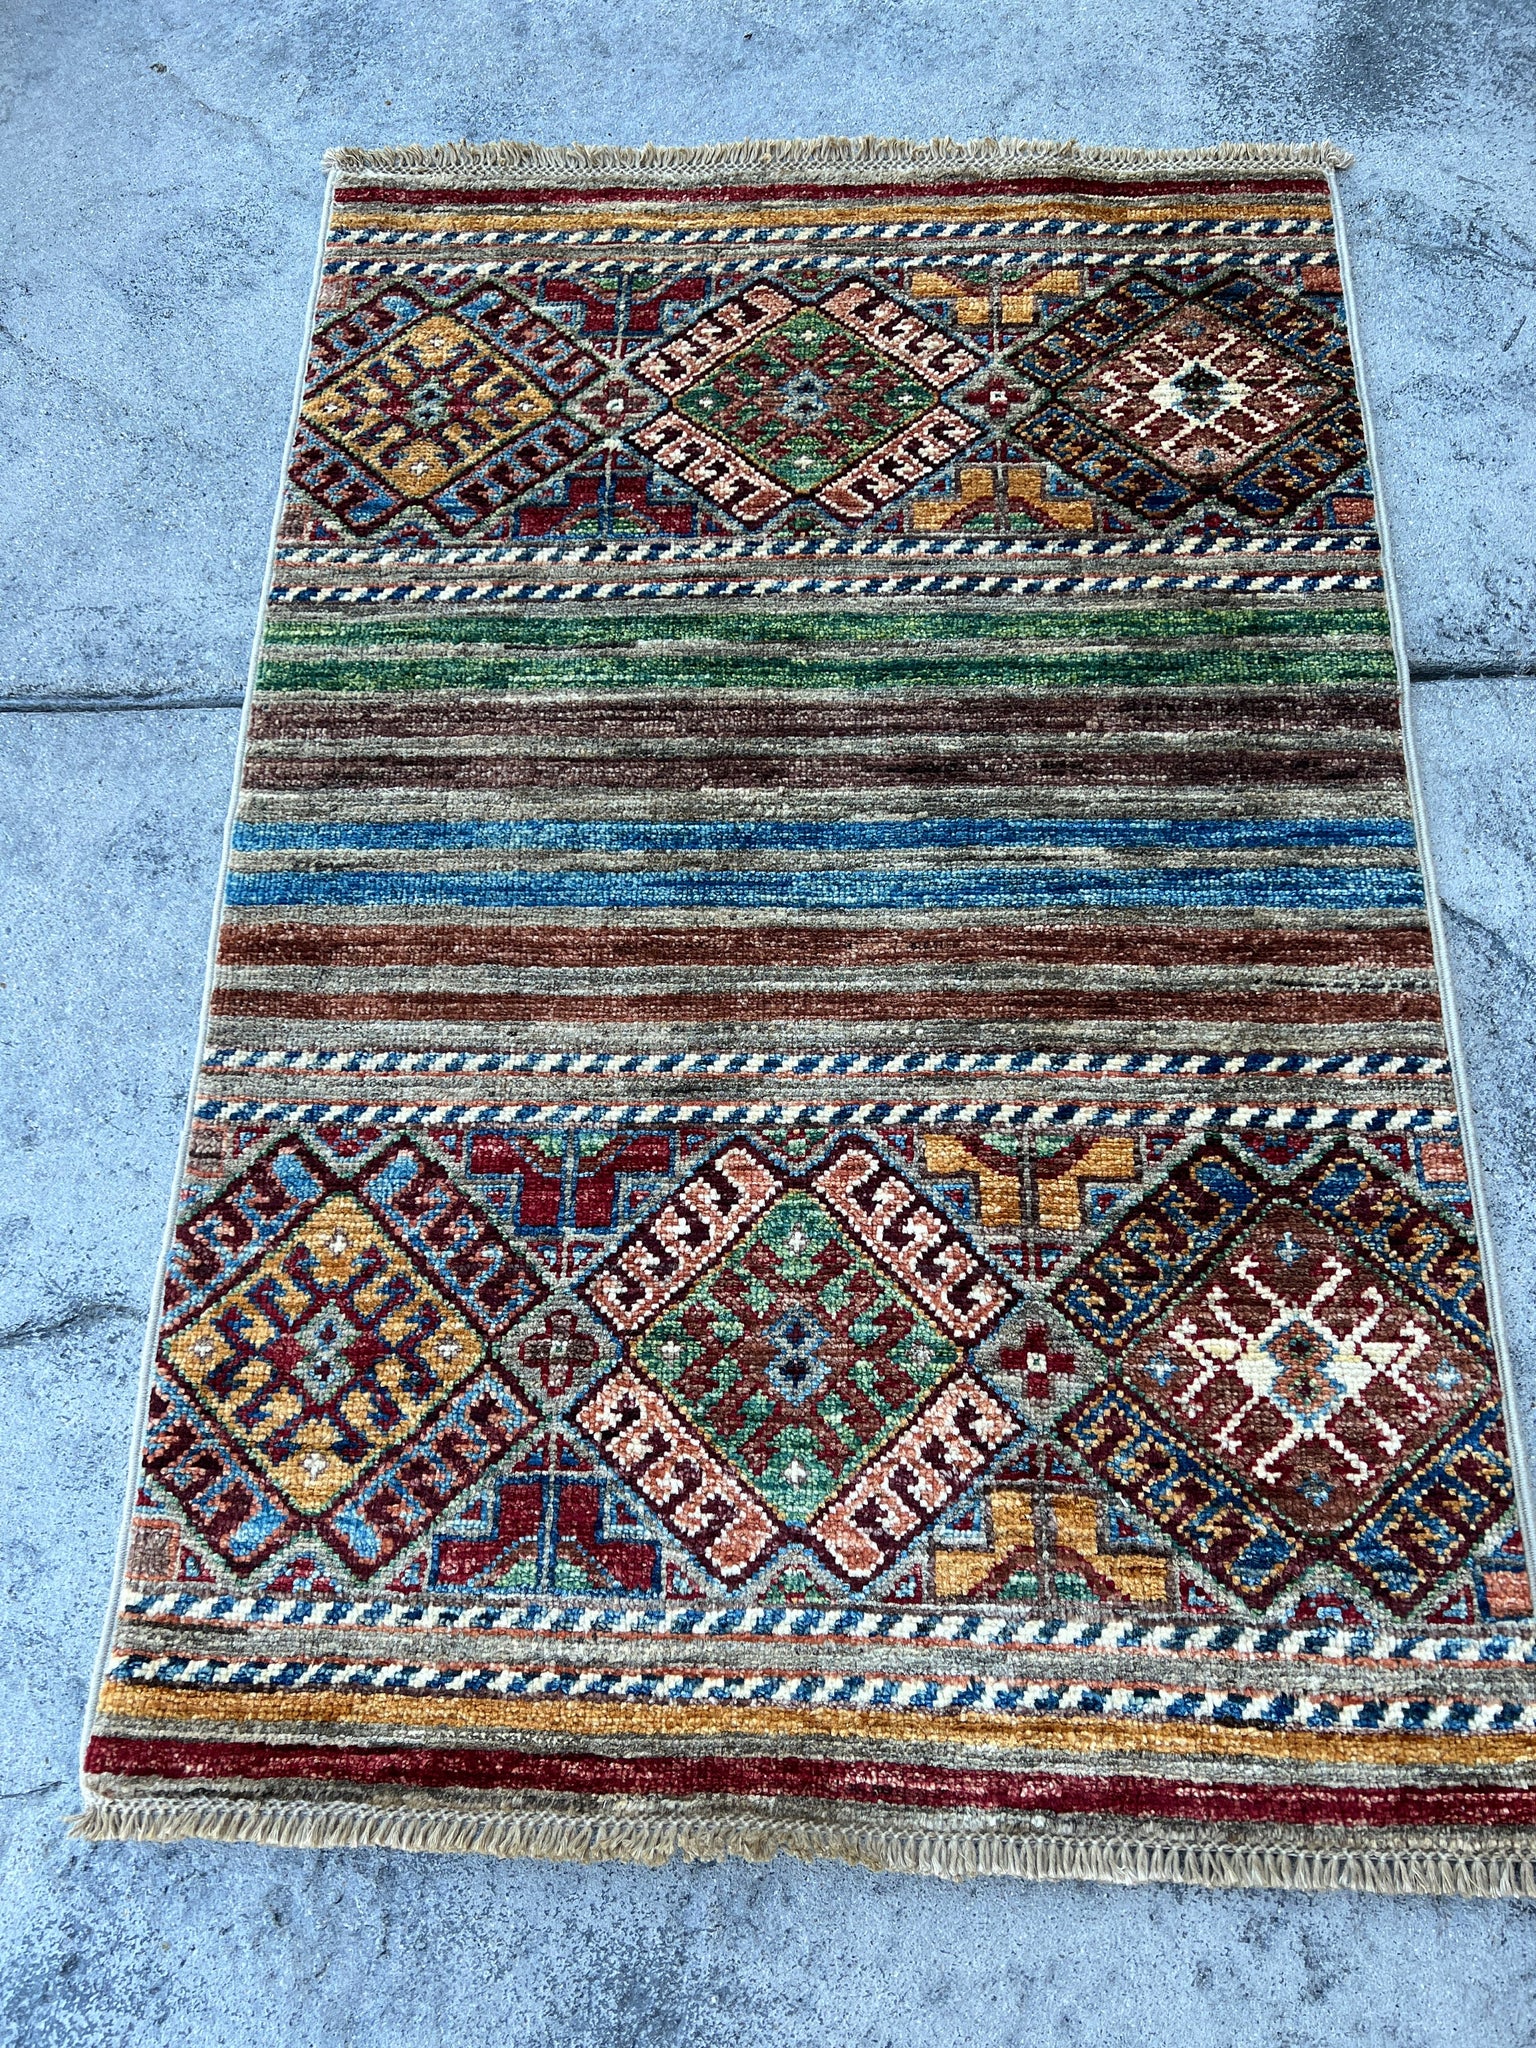 3x4 (90x120) Handmade Afghan Rug | Charcoal Grey Orange Teal Red Orange Ivory Blue Chocolate Brown Black Turquoise | Tribal Wool Boho